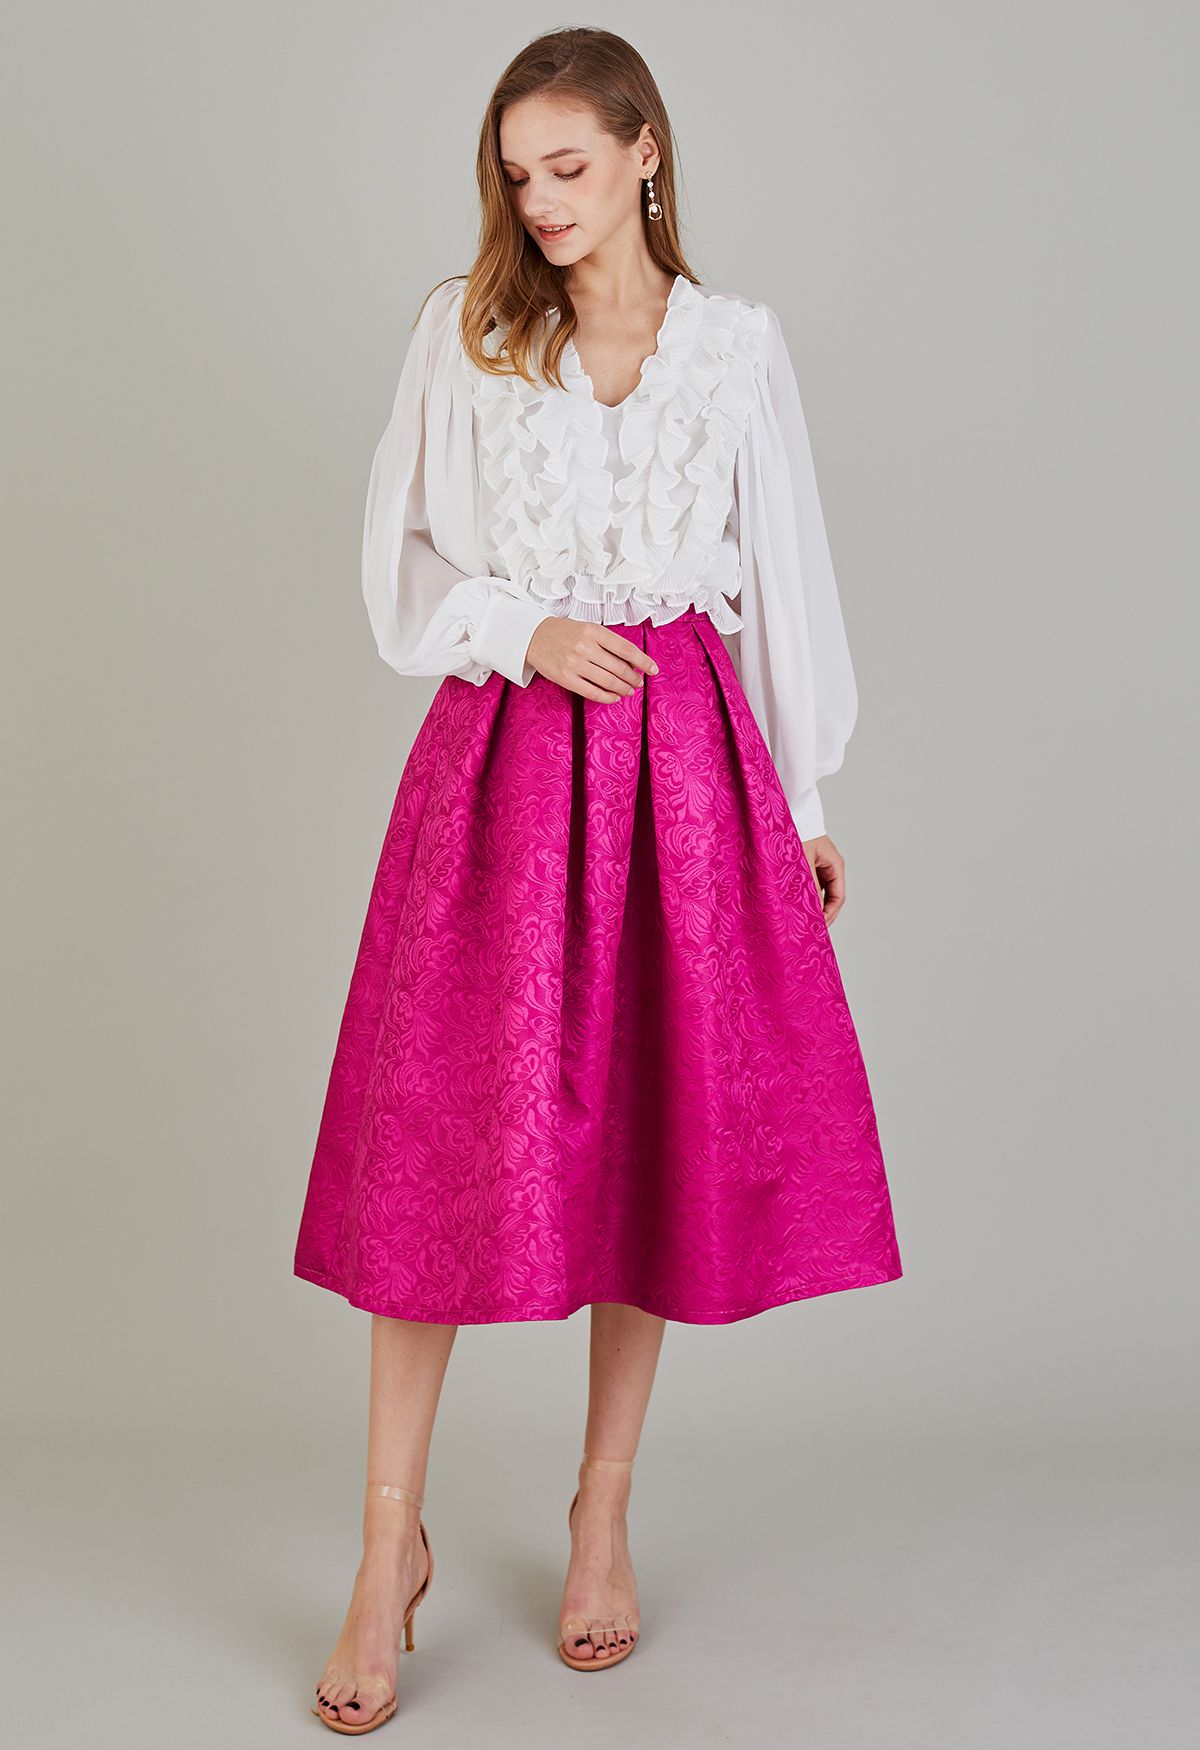 Noble Embossed Floral Jacquard Midi Skirt in Magenta